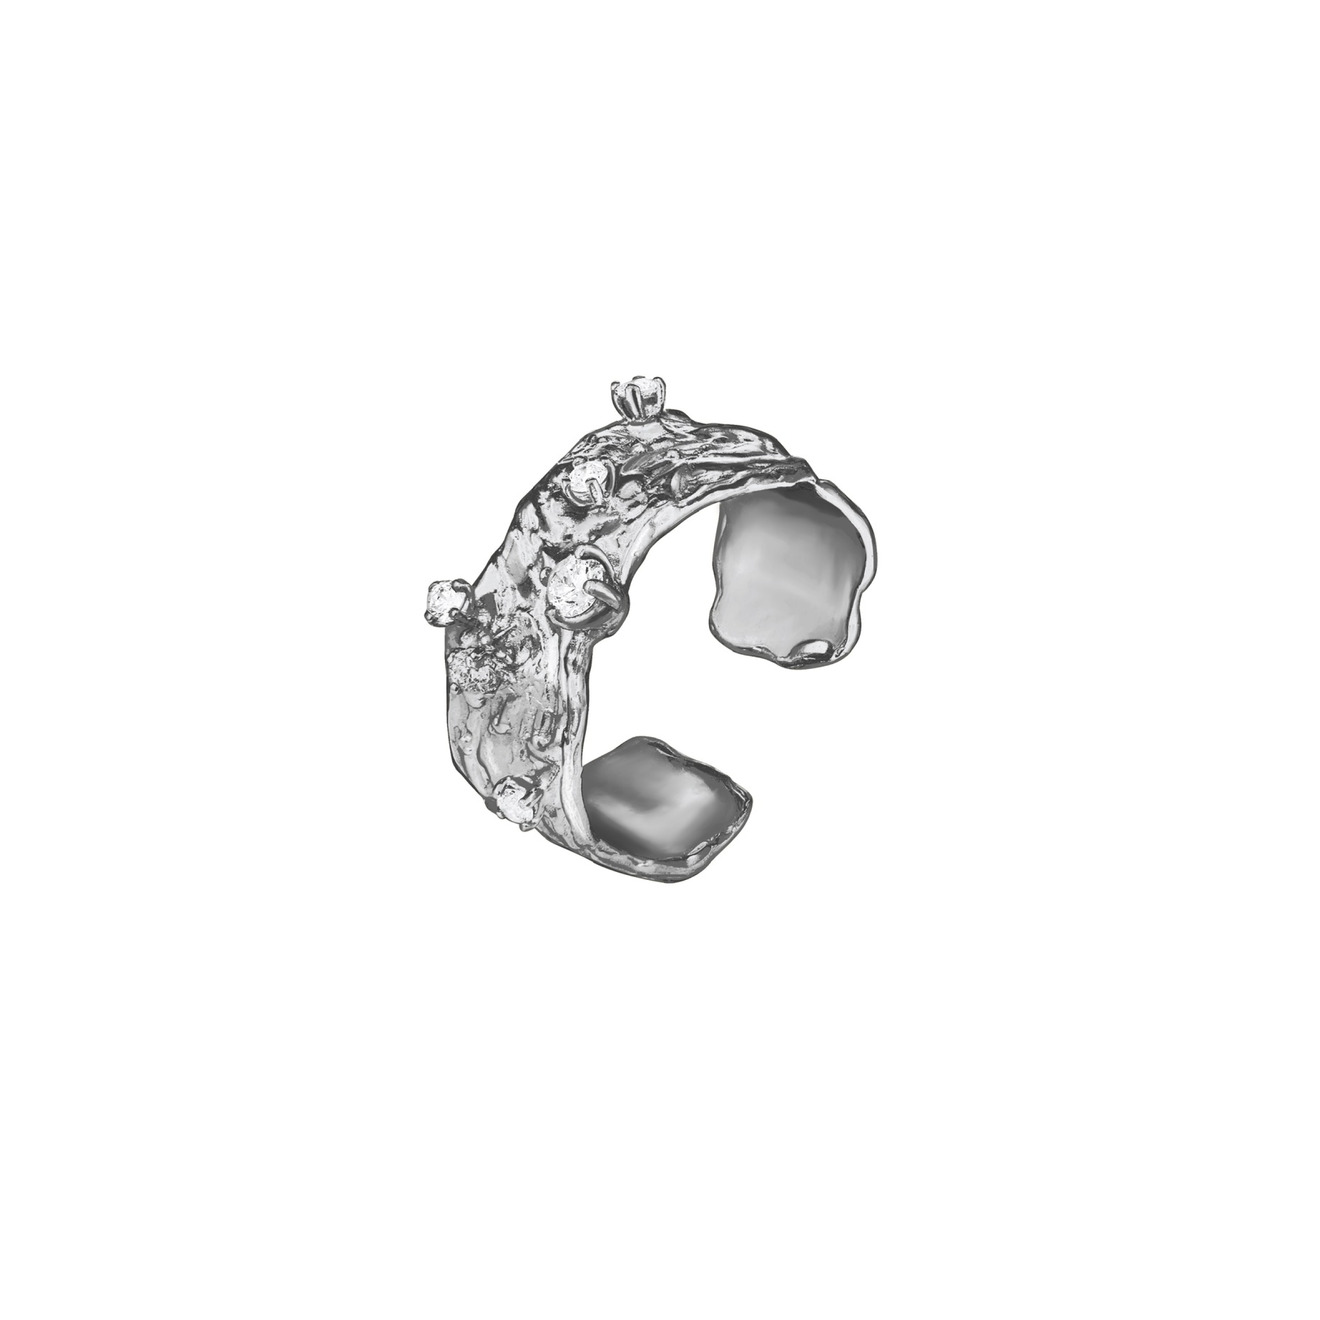 nastya maximova безразмерное кольцо из серебра с фианитами Nastya Maximova Безразмерное кольцо из серебра с фианитами